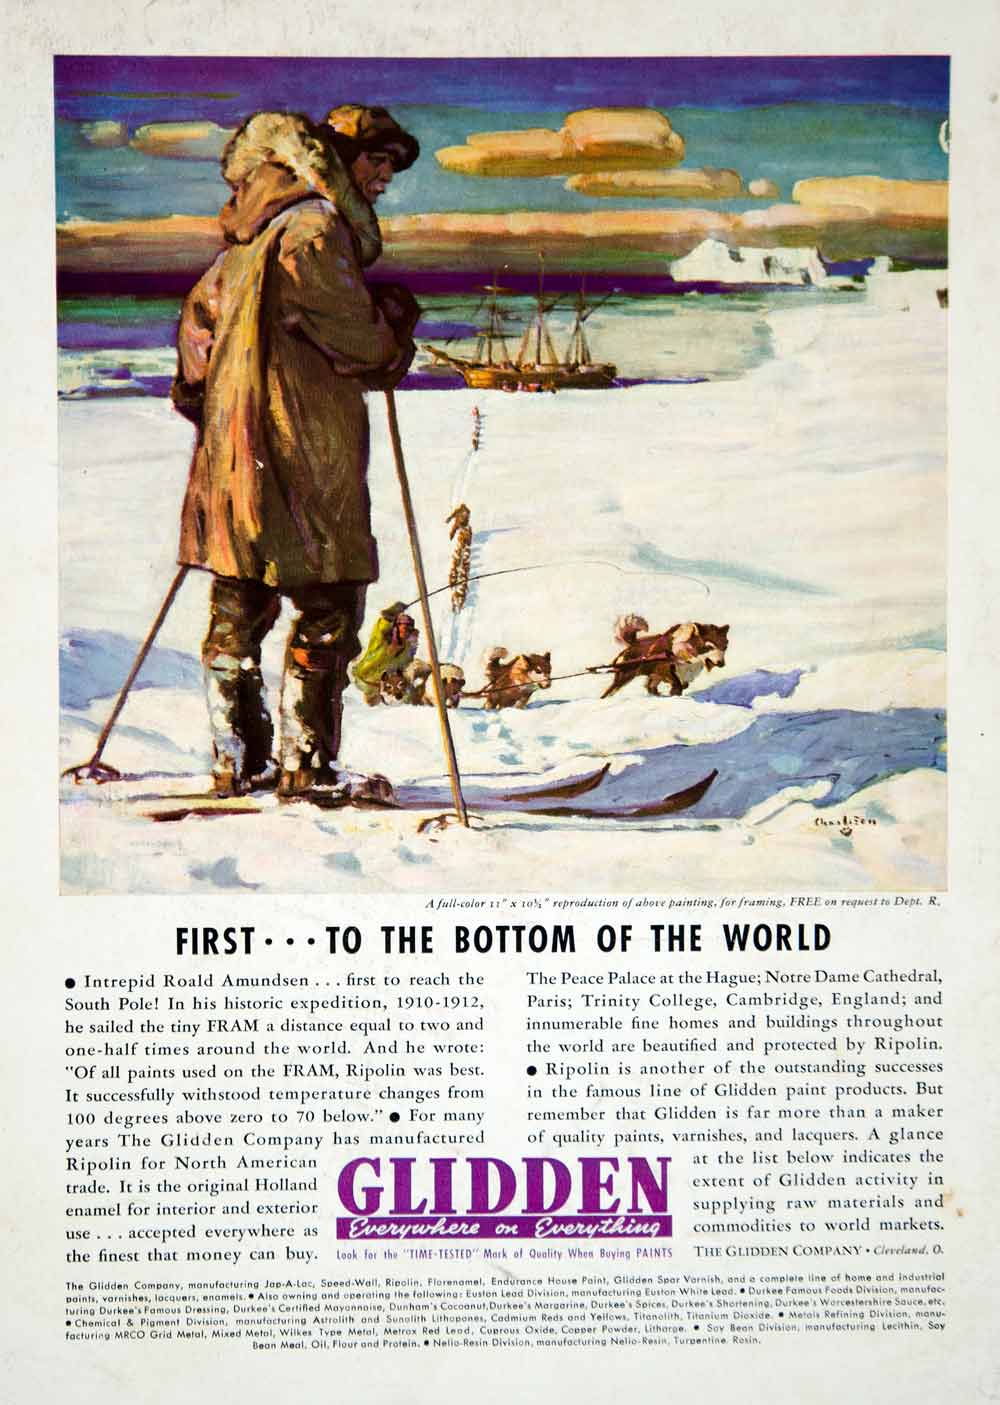 1937 Ad Glidden Paint Company Roald Amundsen South Pole Traveler Explorer Image